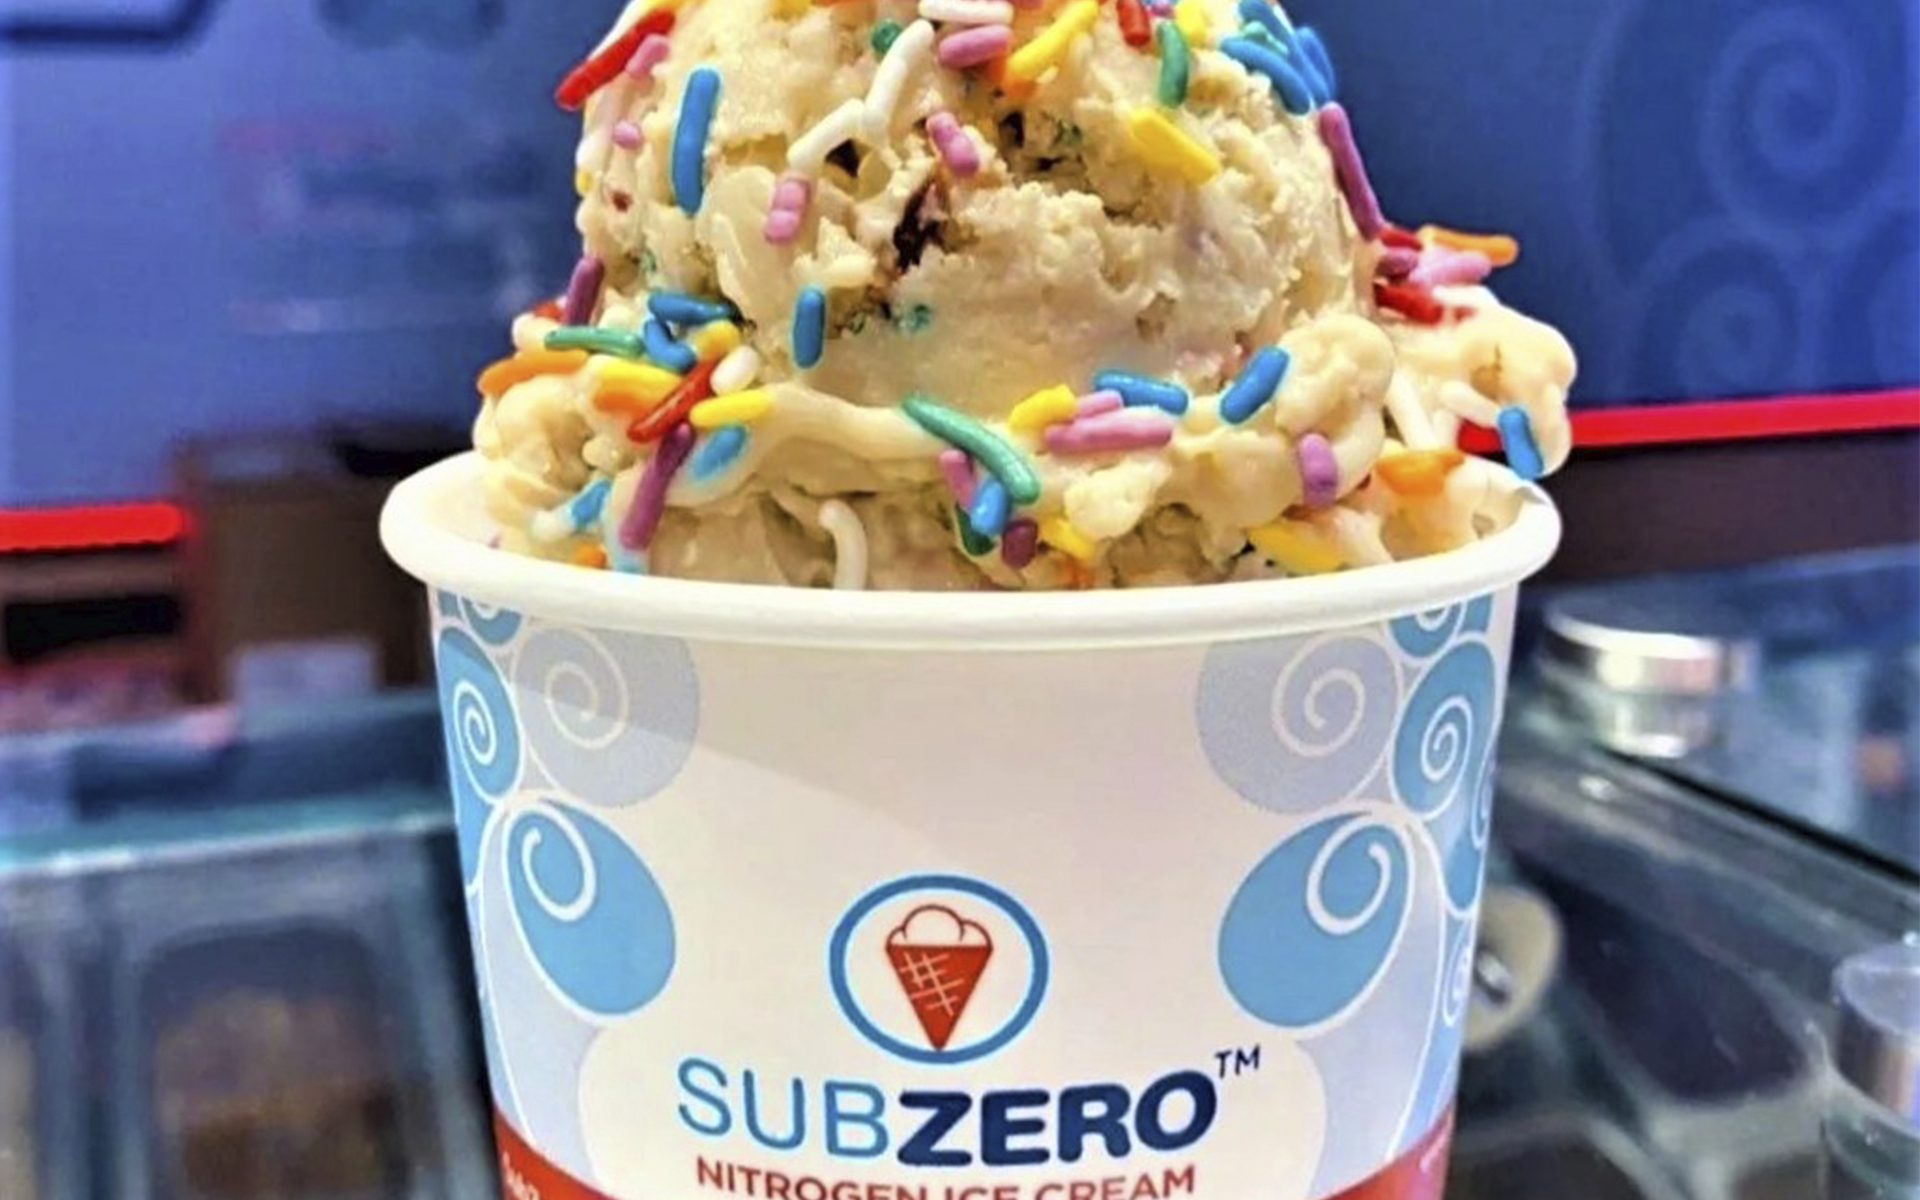 Sub Zero Nitrogen Ice Cream in Cambridge, MA at Restaurant.com